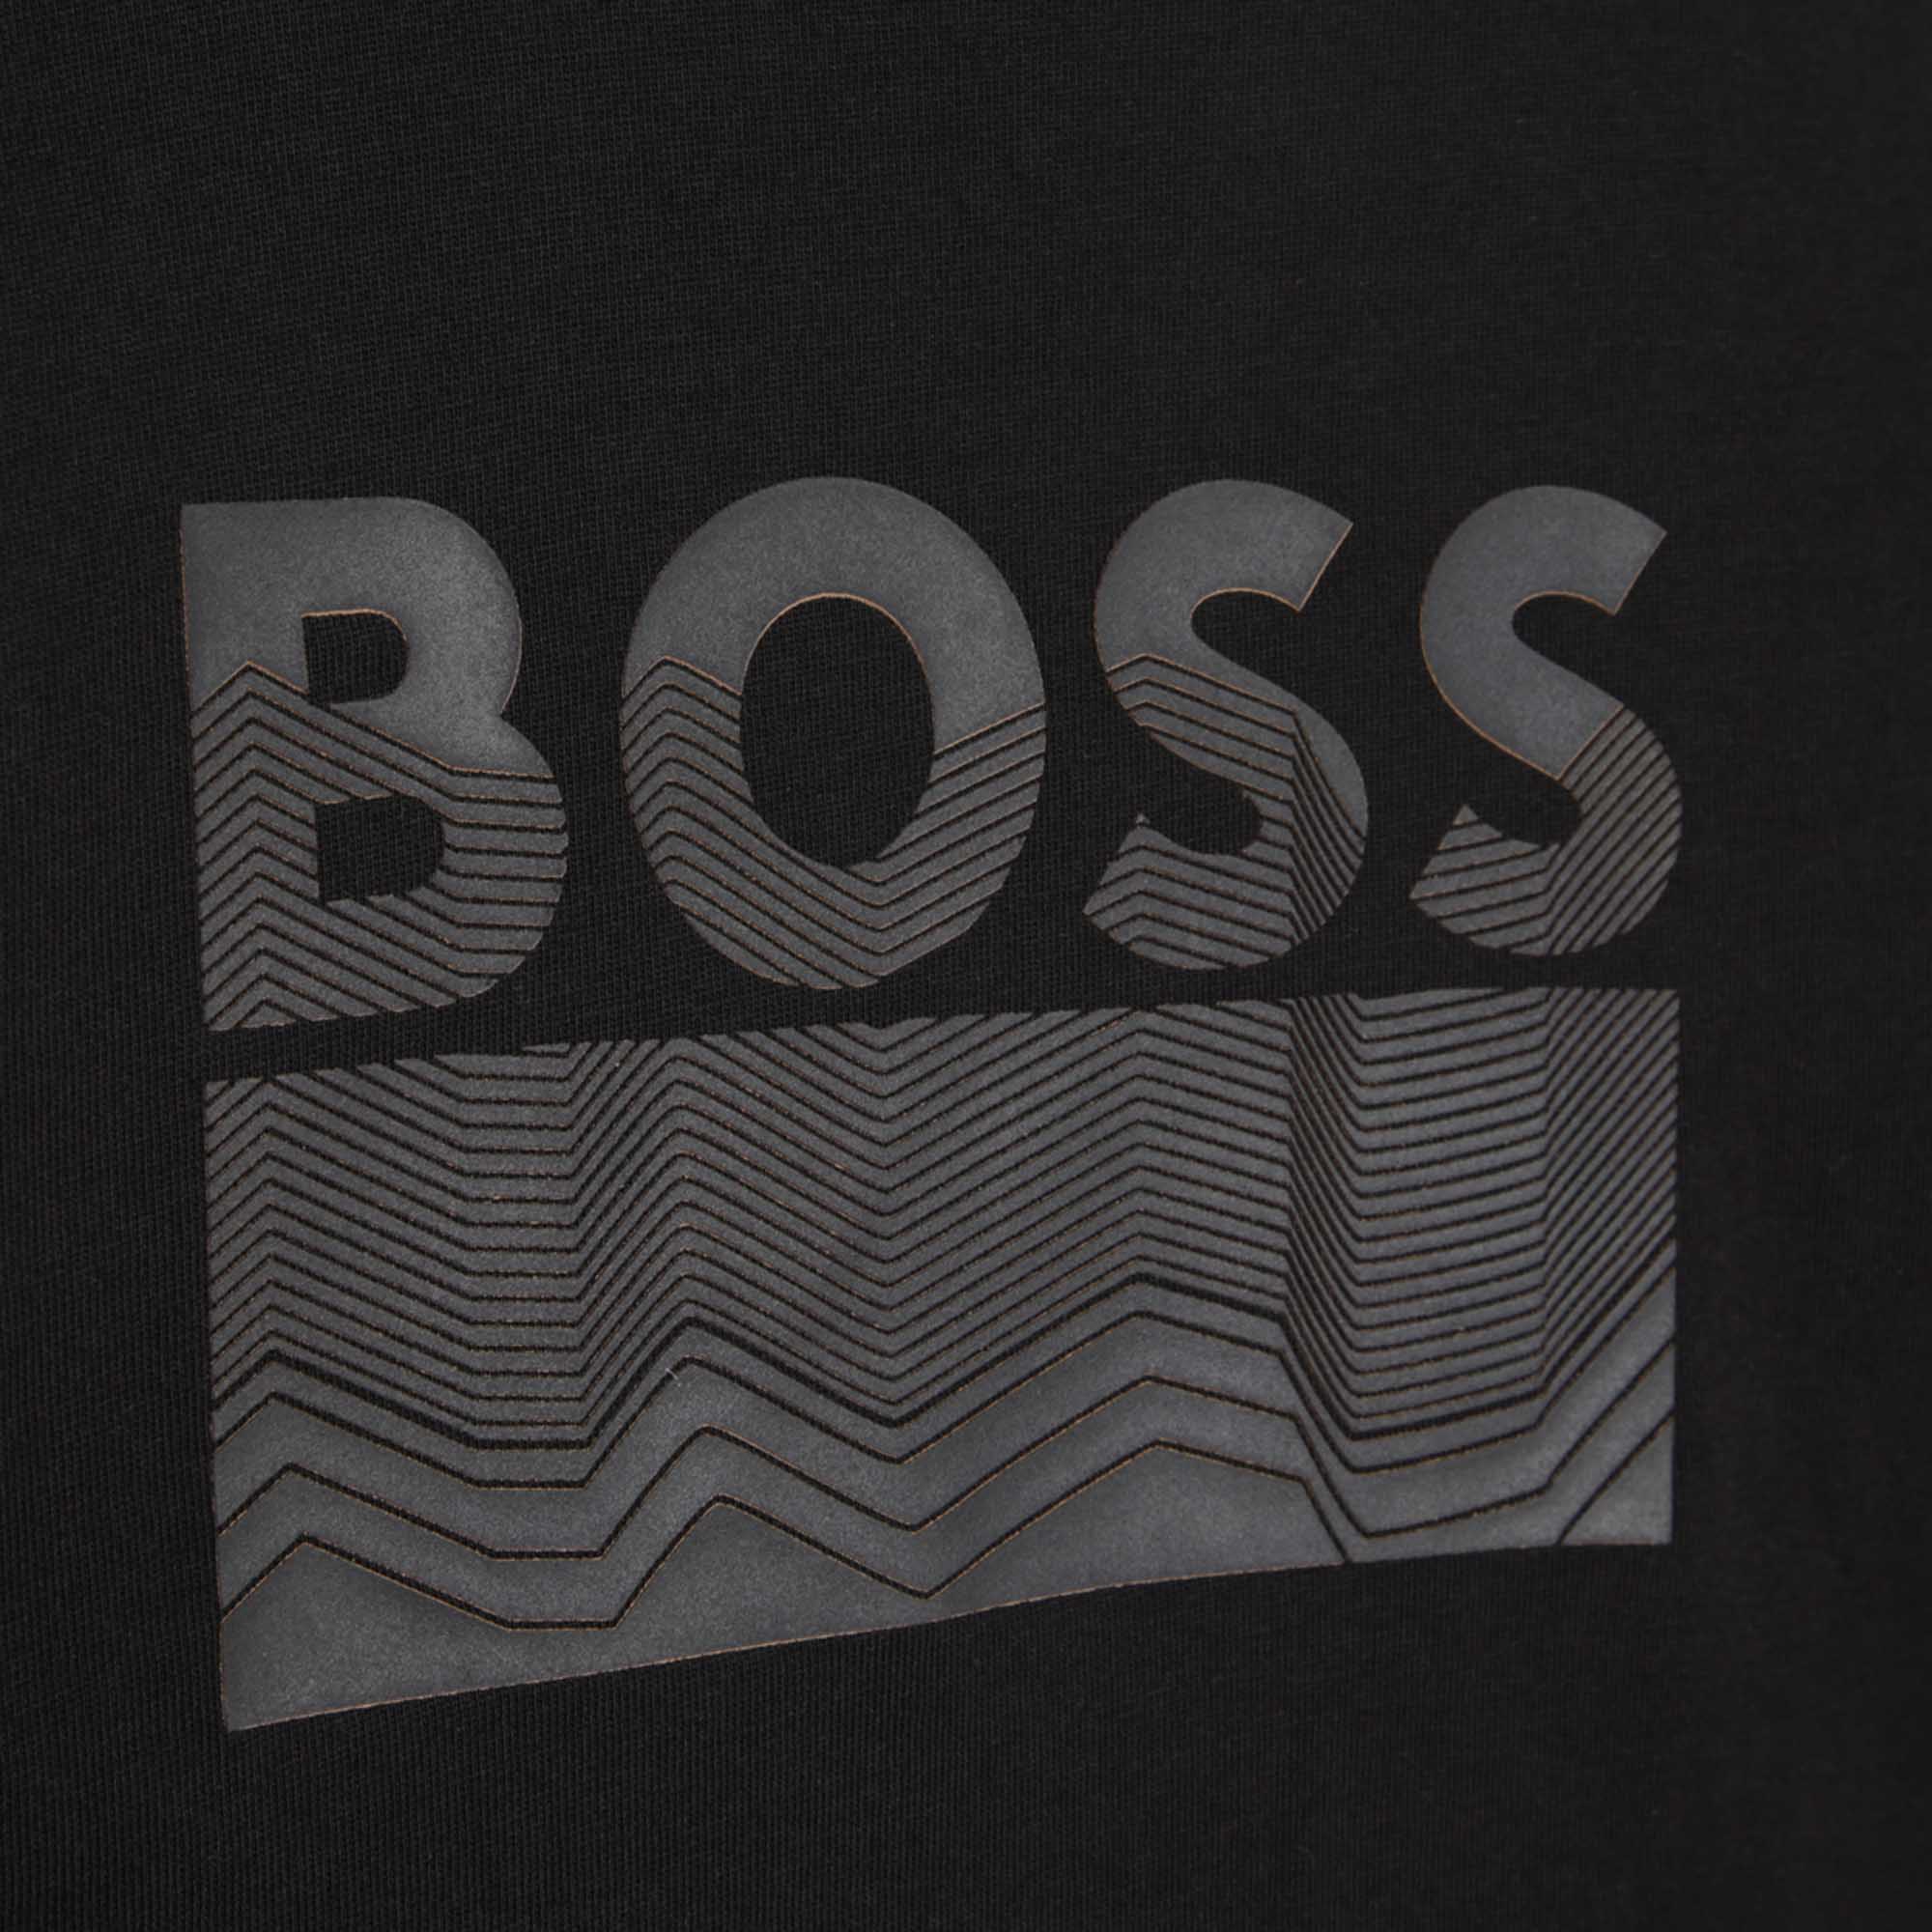 Hugo Boss Kids Iconic Chest Logo T-shirt Black 12Y